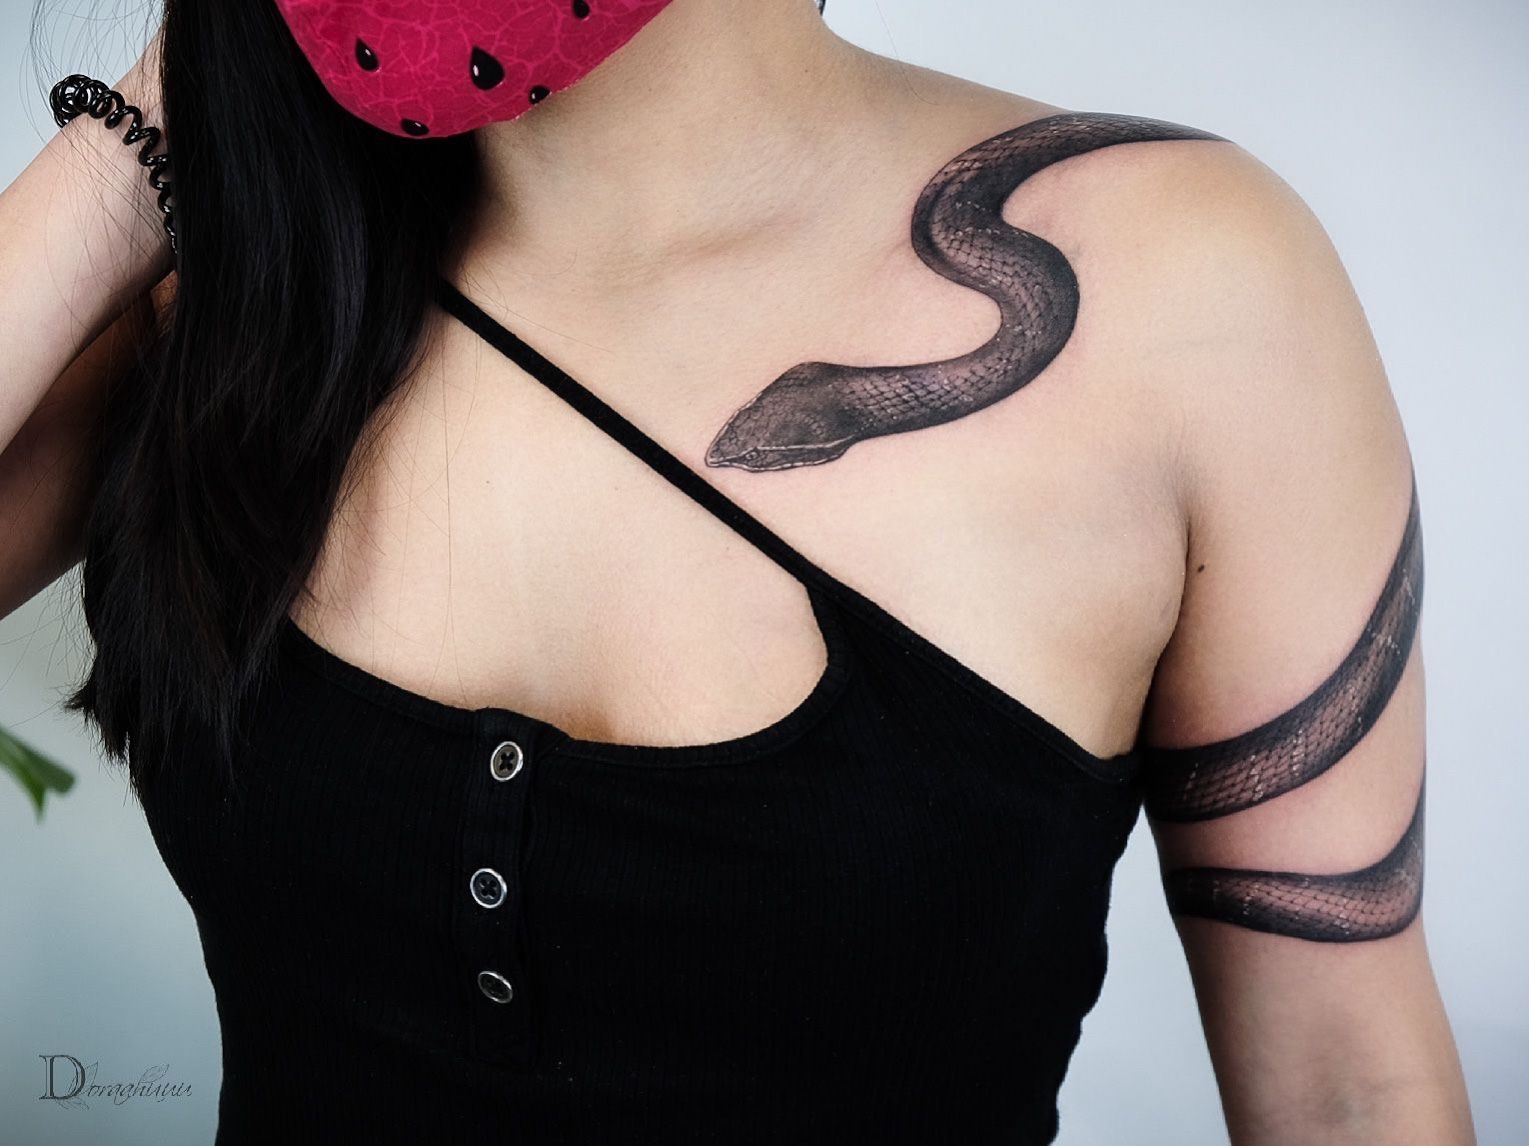 Collarbone Snake Minimalist Blackwork Tattoo  Best Tattoo Ideas For Men   Women